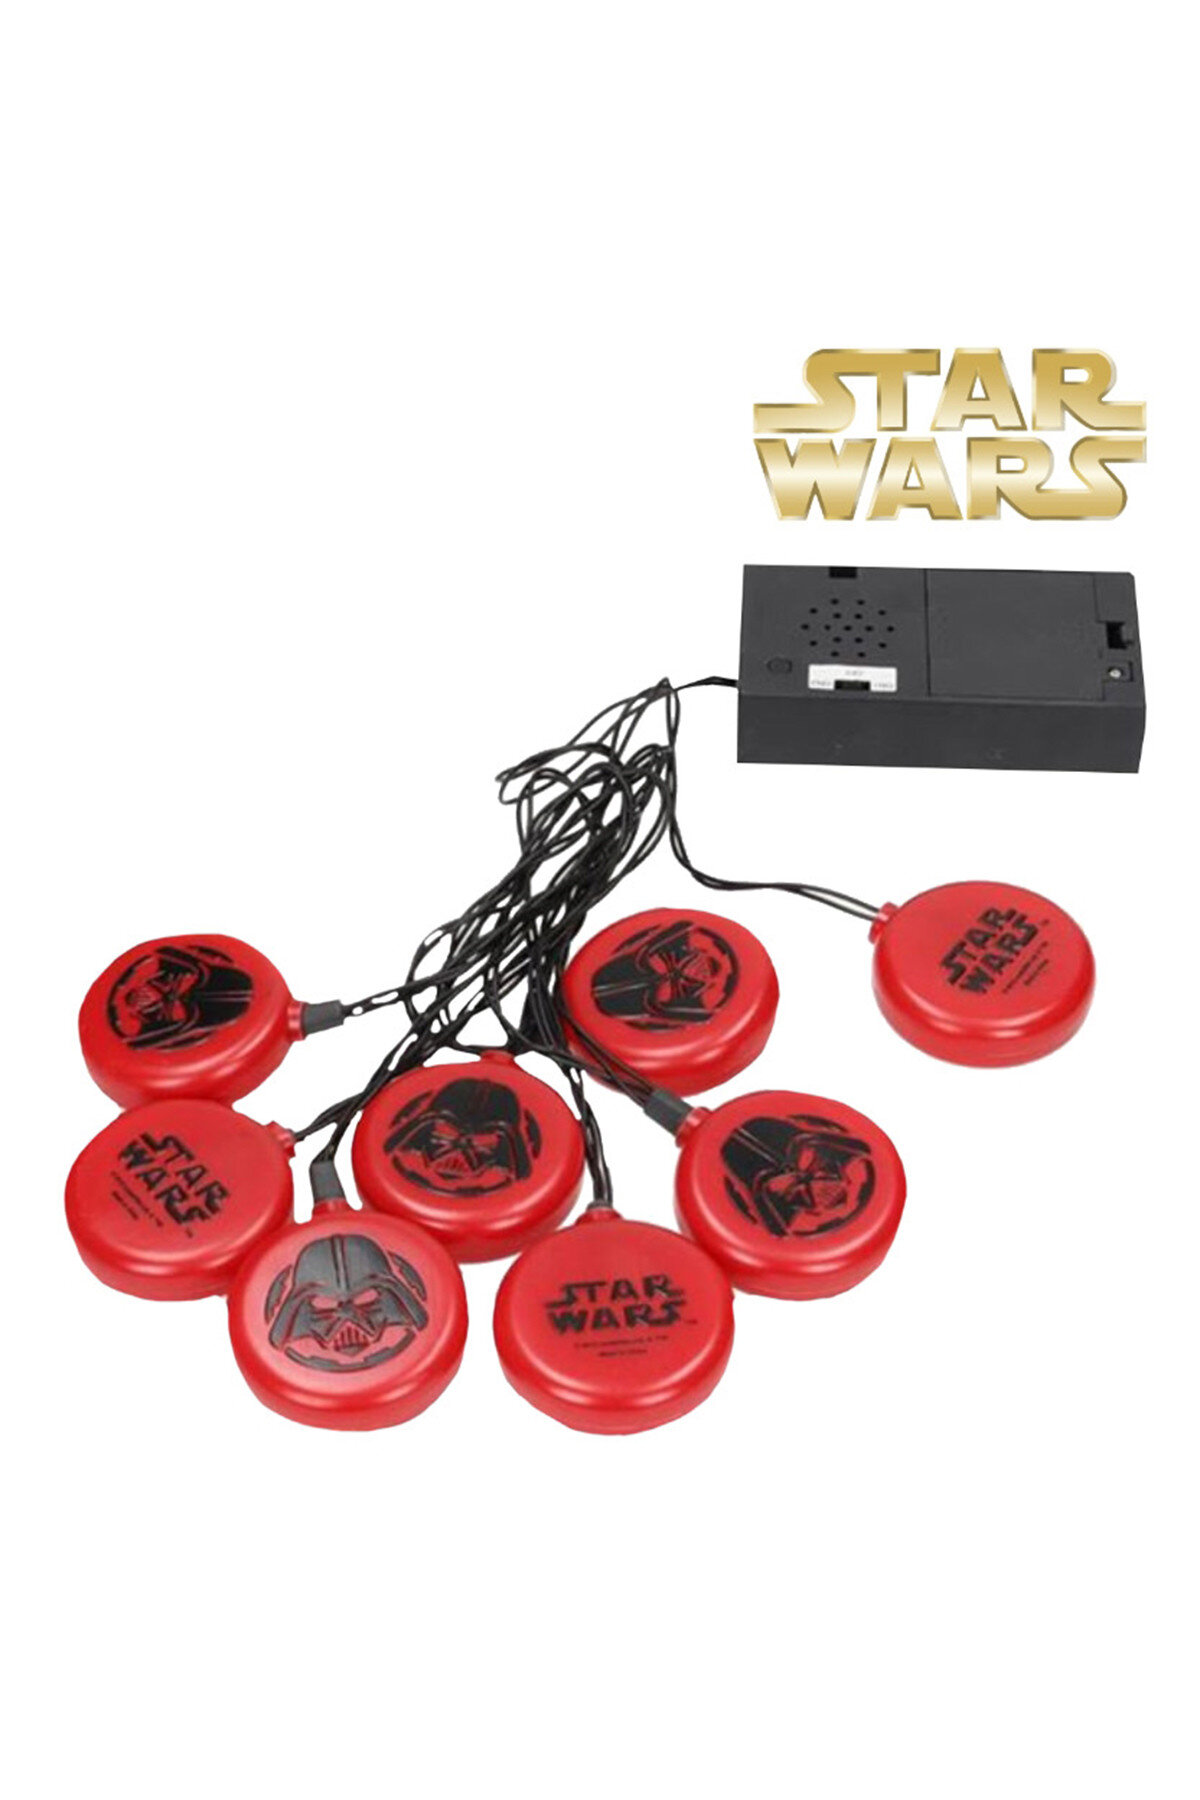 SD Toys Star Wars Darth Vader Light Set With Sound Işık